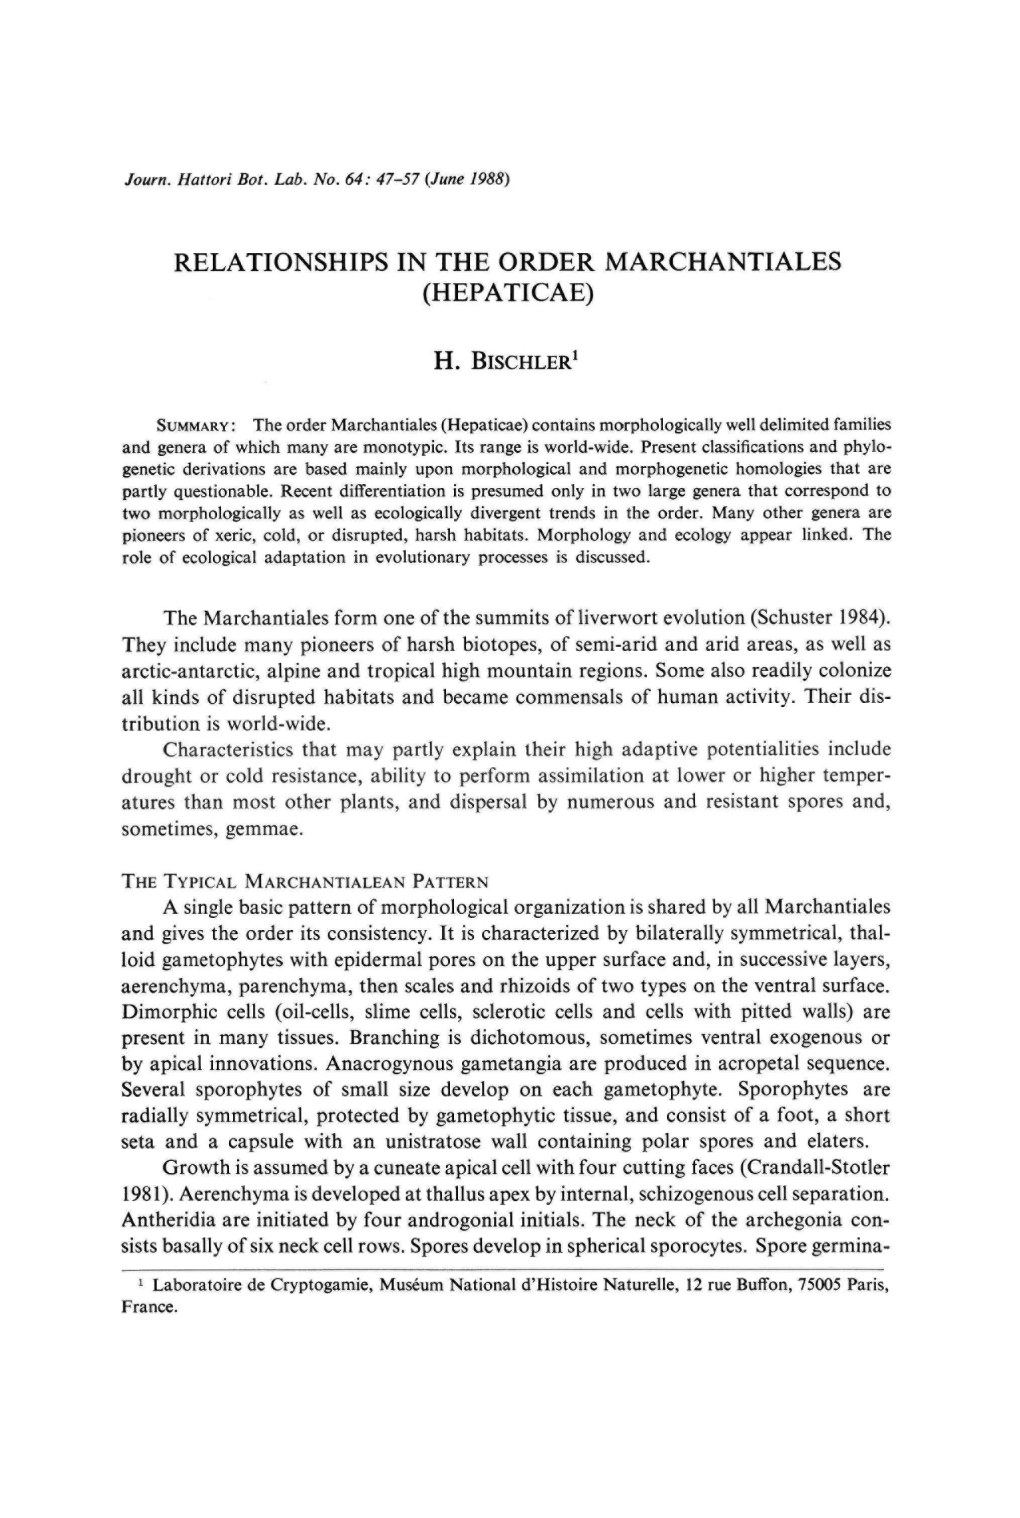 Relationships in the Order Marchantiales (Hepa Ticae)